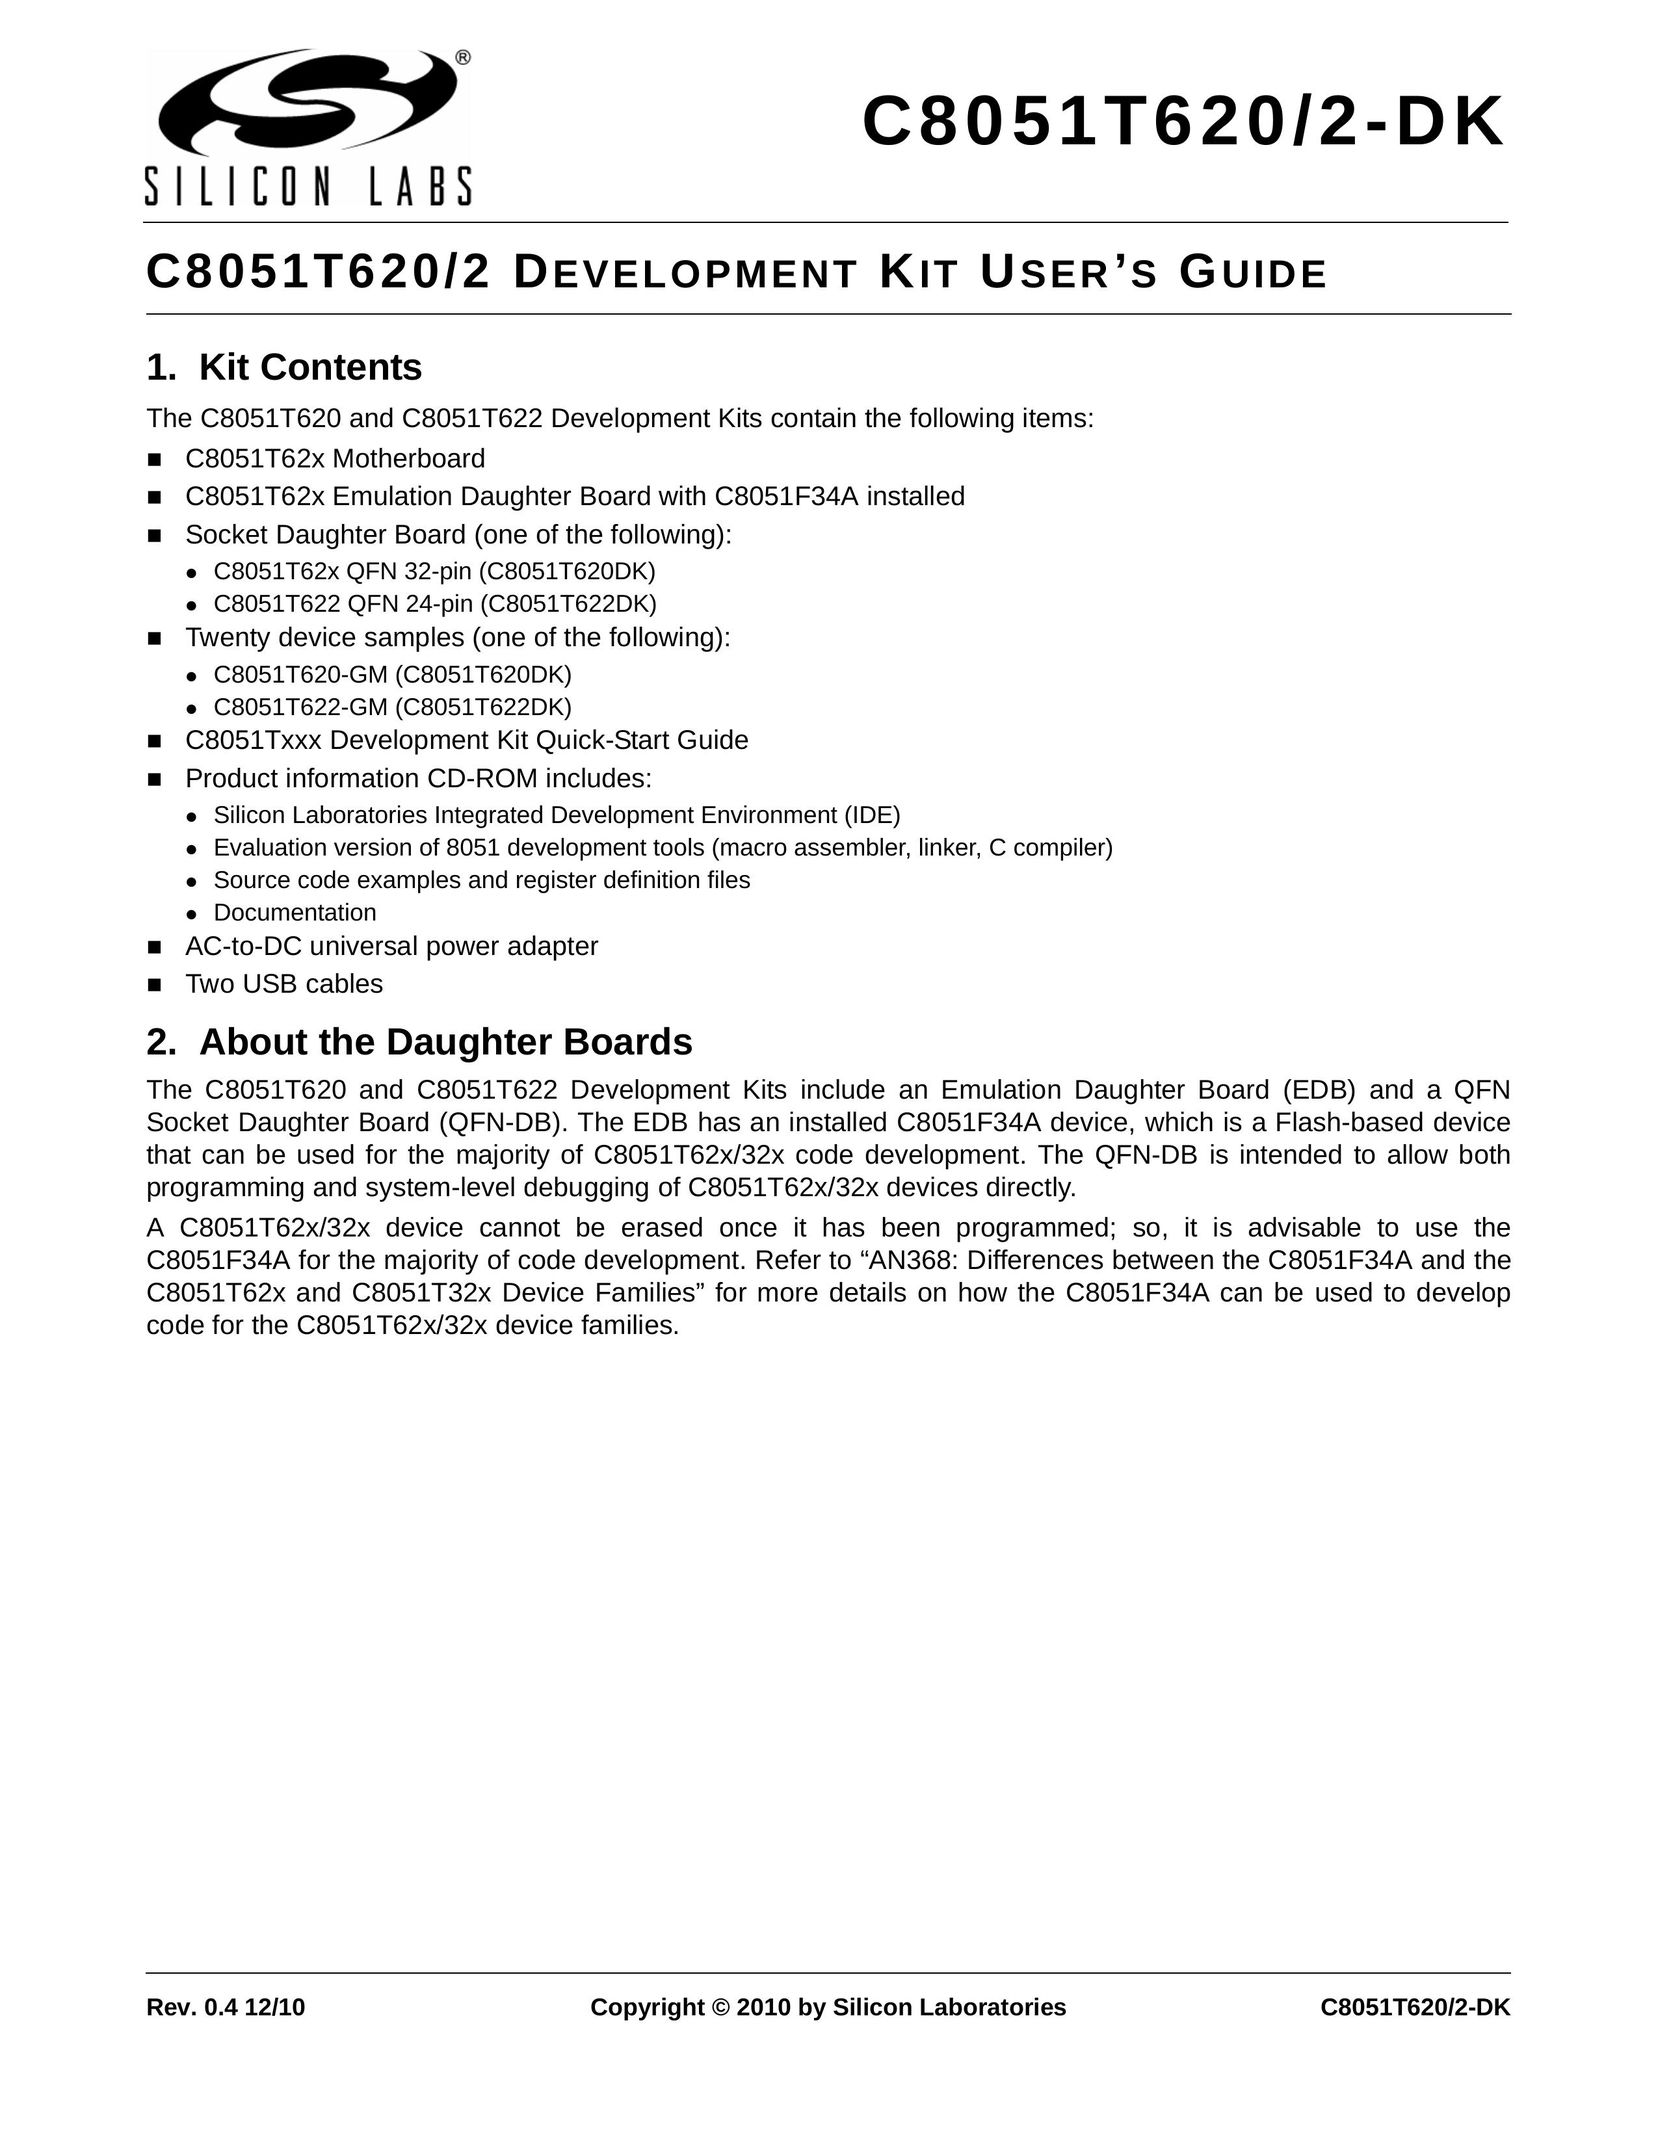 Silicon Laboratories C8051T620/2-DK Computer Hardware User Manual